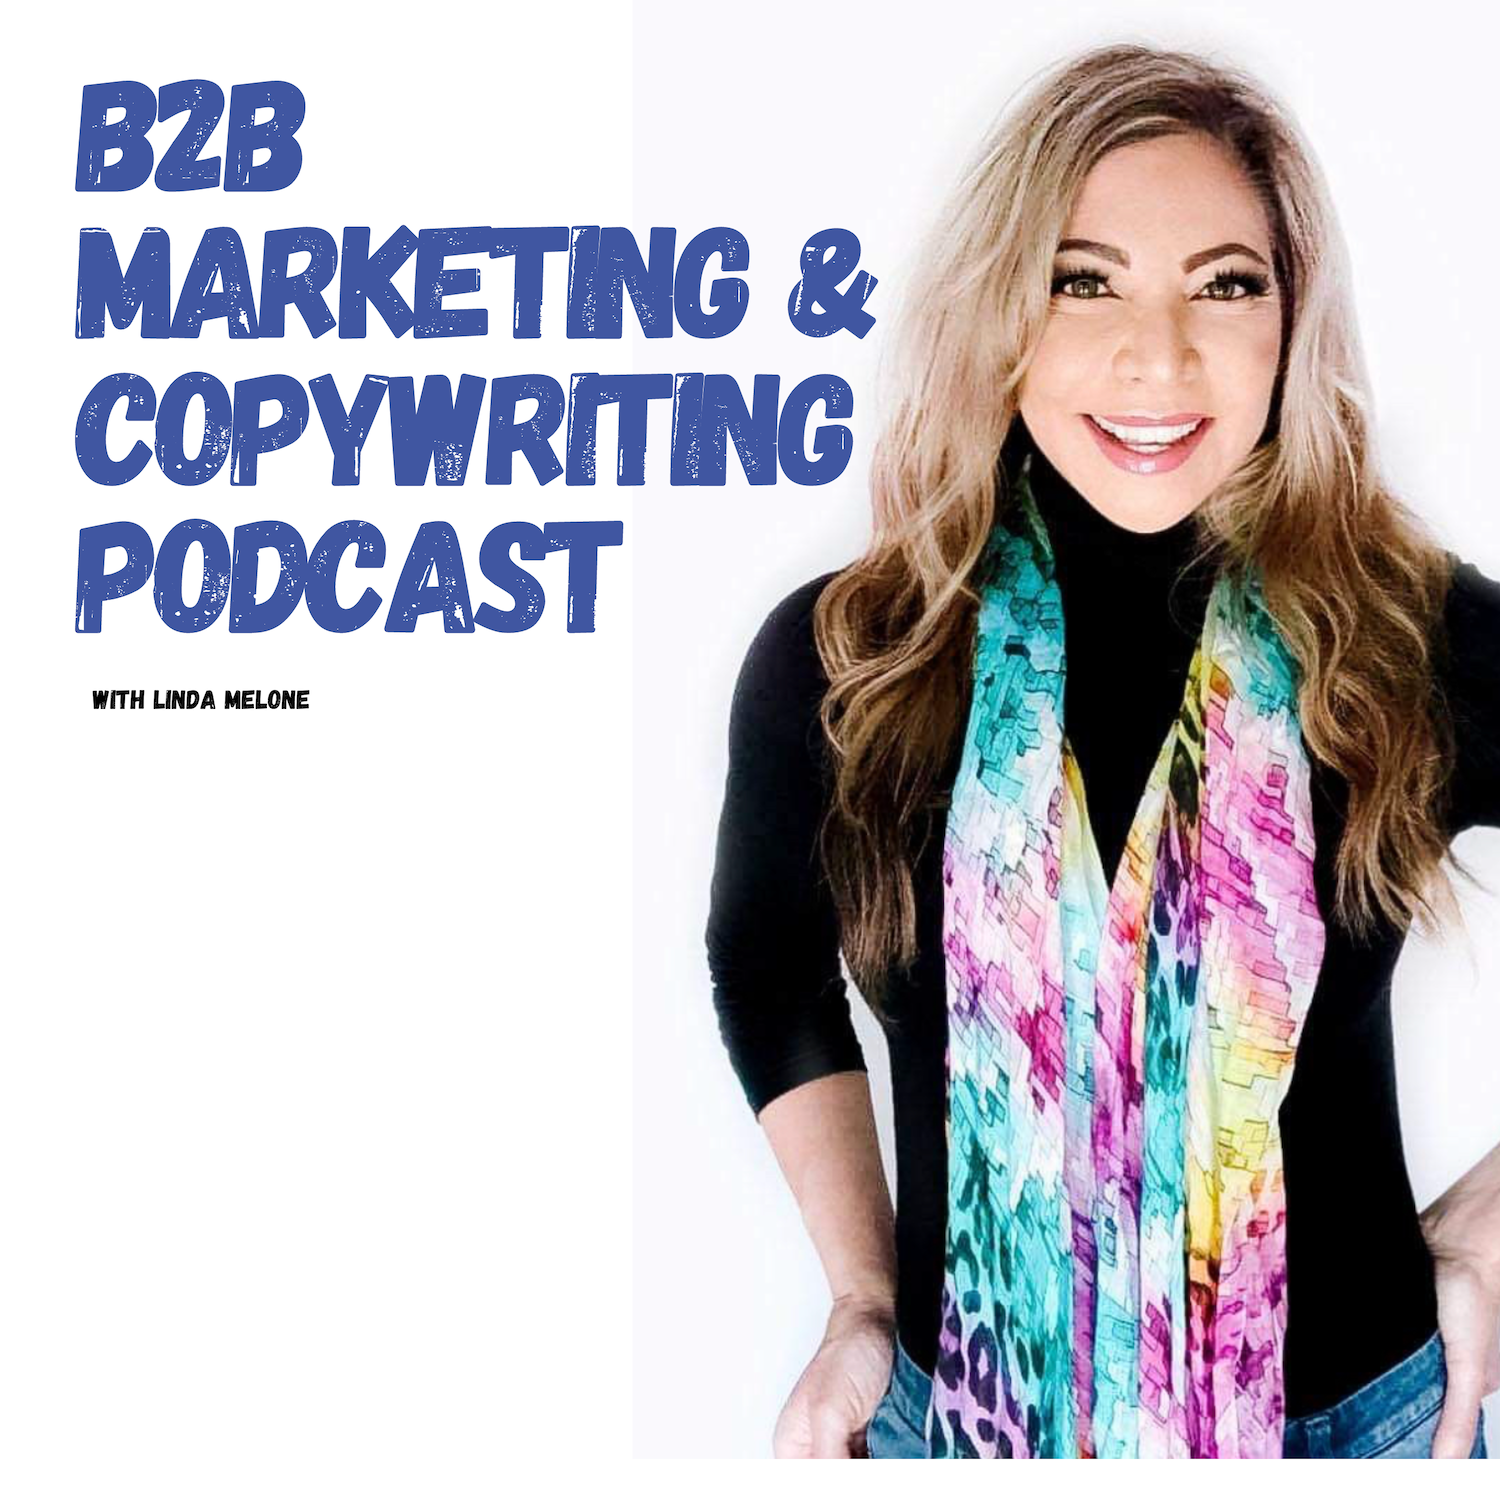 Artwork for podcast B2B Marketing & Copywriting